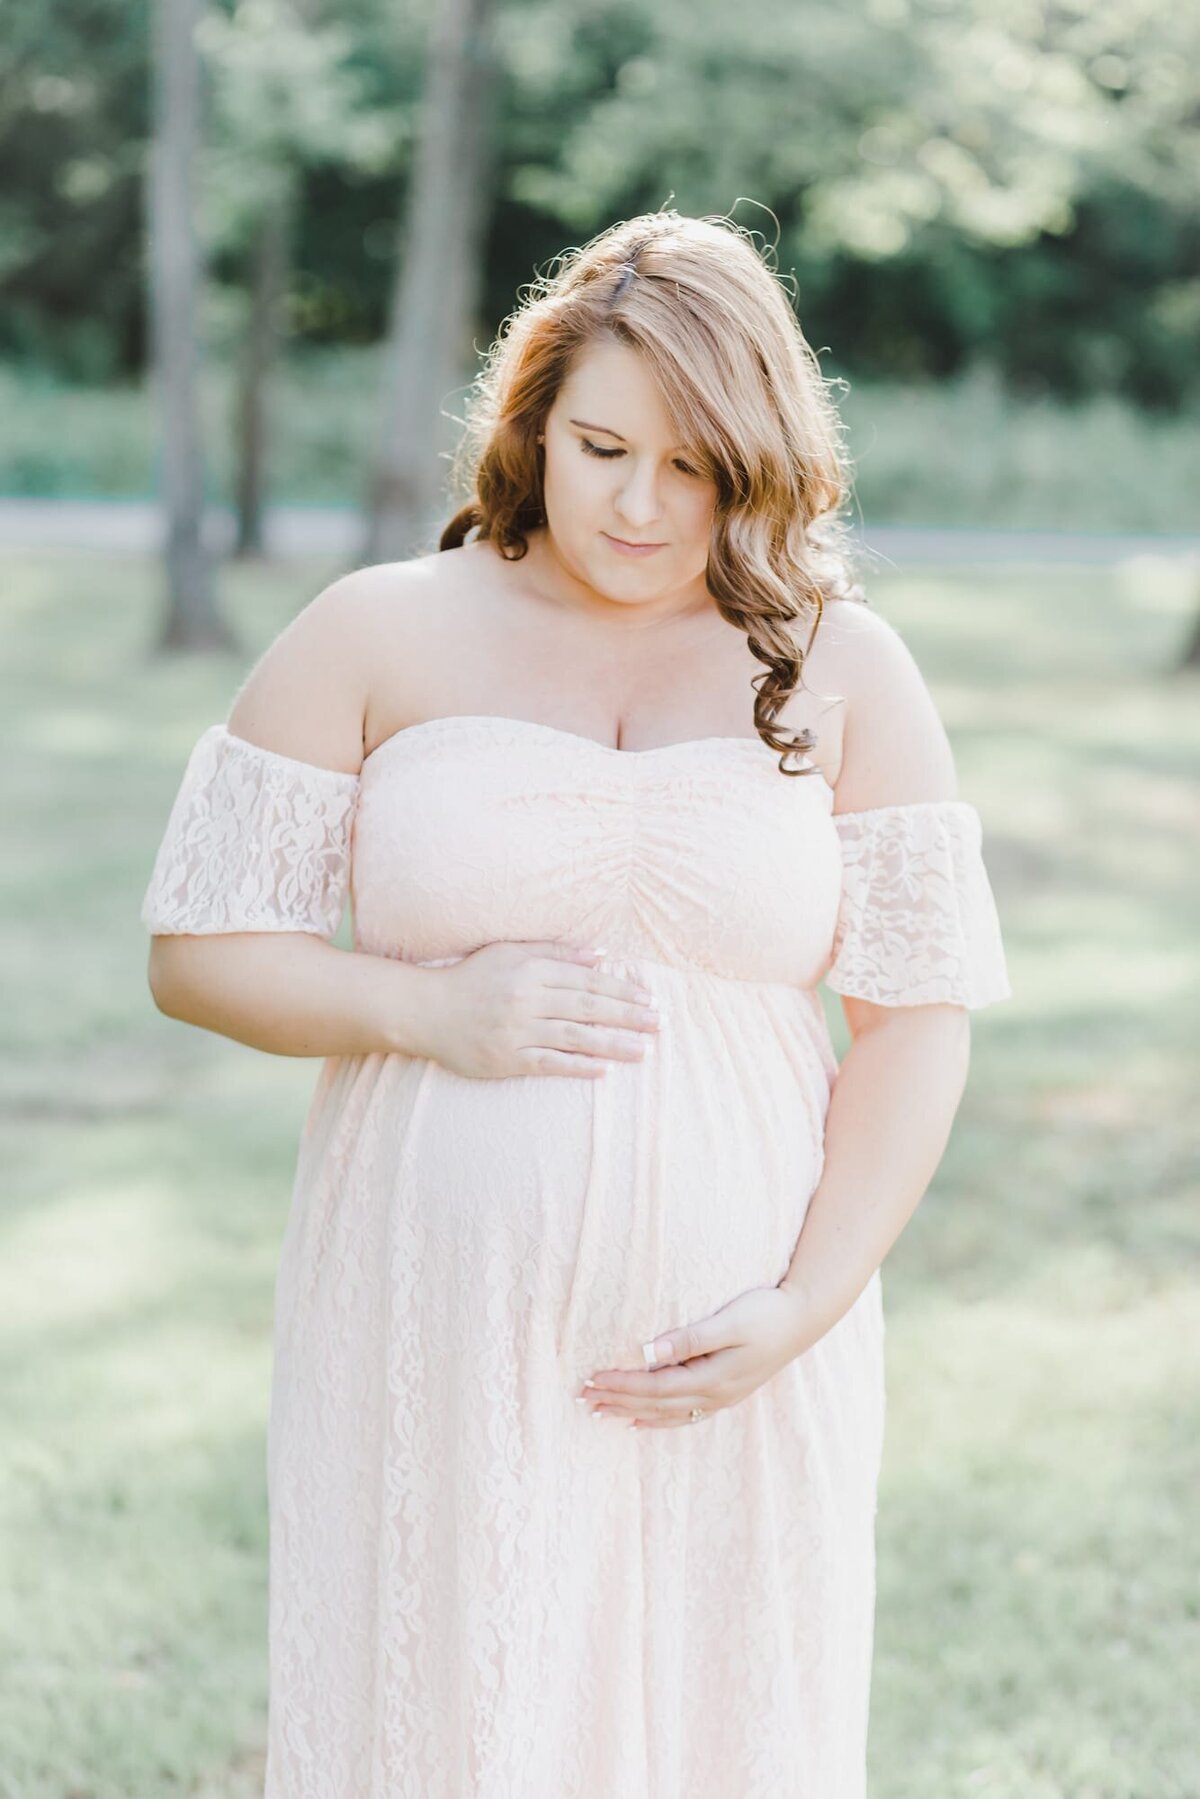 Jenn-Northern-Virginia-Maternity-8